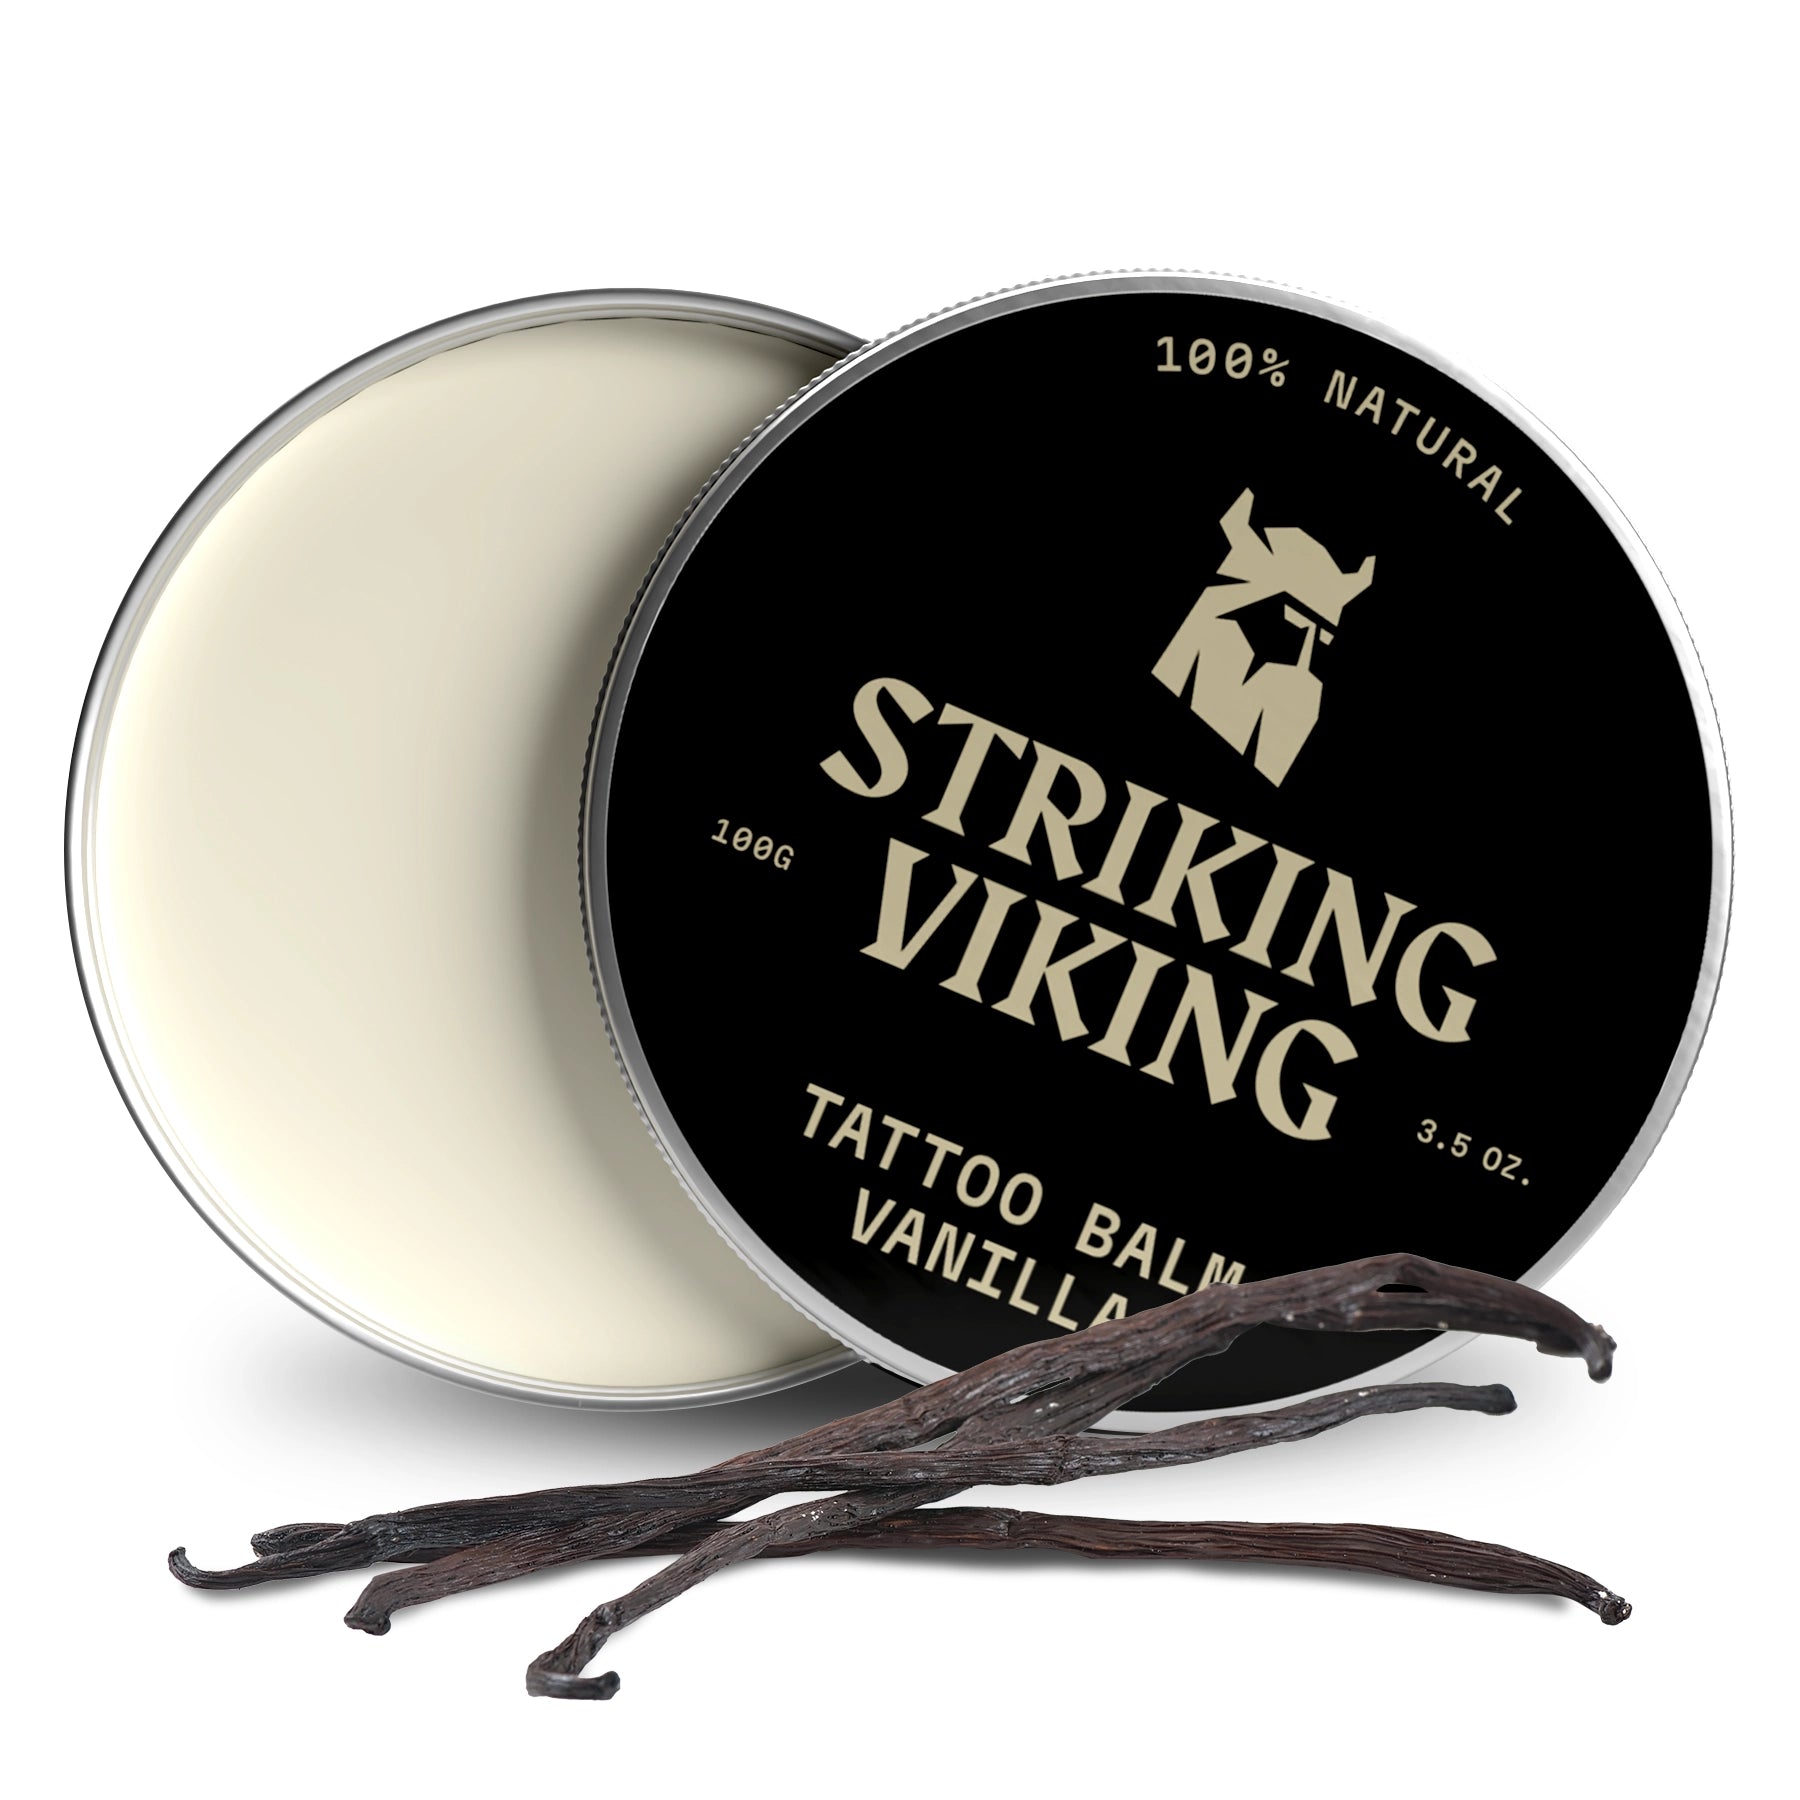 Striking Viking Tattoo Balm - Vanilla